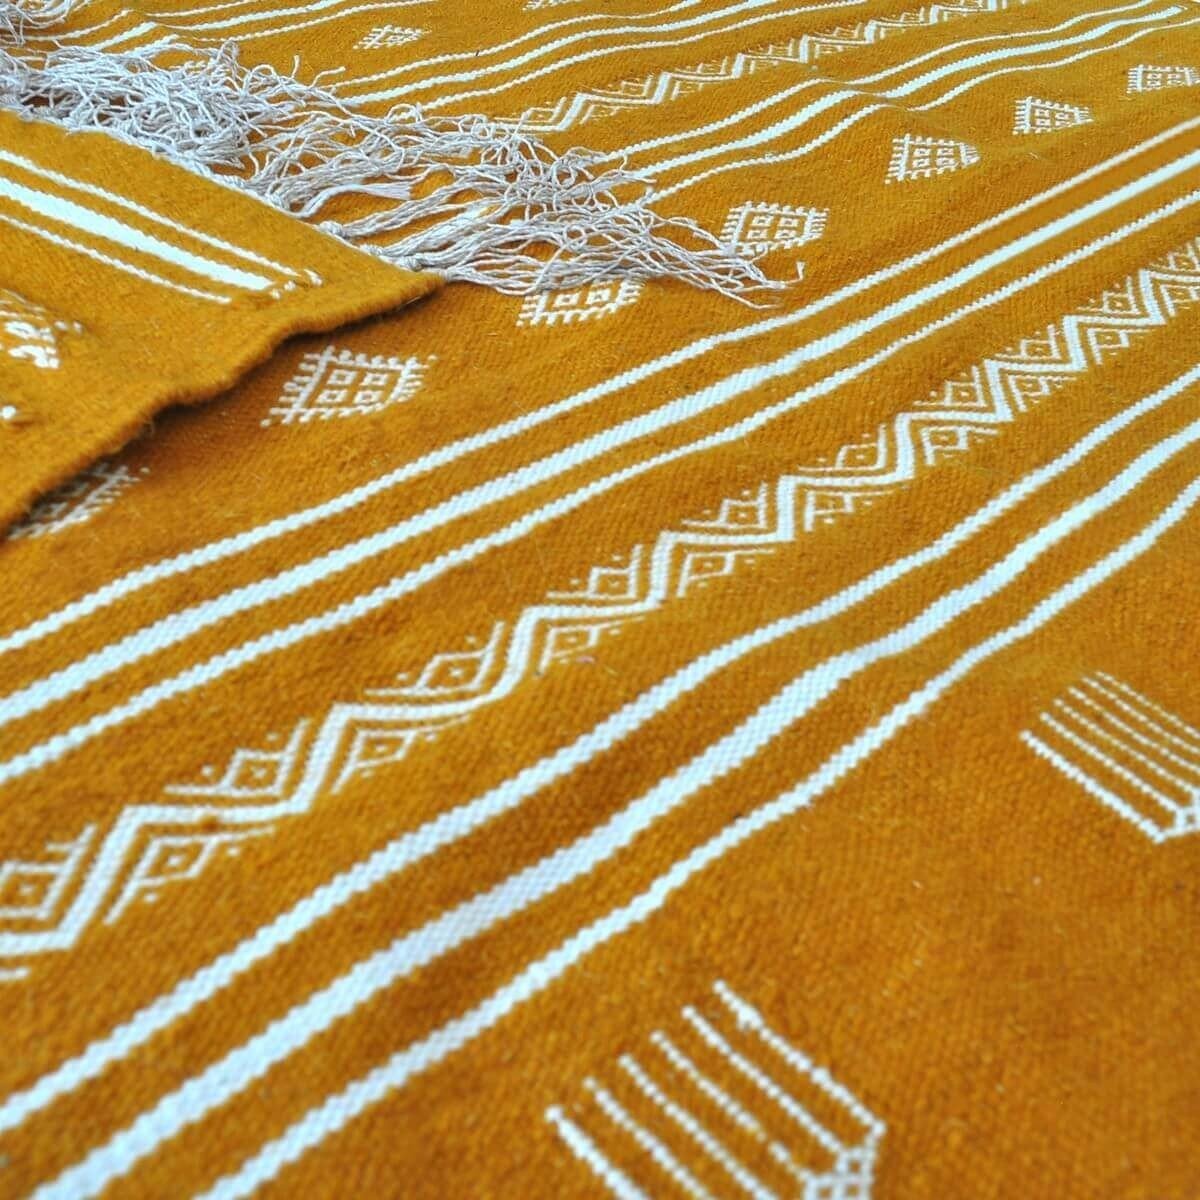 Berber tapijt Tapijt Kilim Jawad 135x240 Geel/Wit (Handgeweven, Wol, Tunesië) Tunesisch kilimdeken, Marokkaanse stijl. Rechthoek